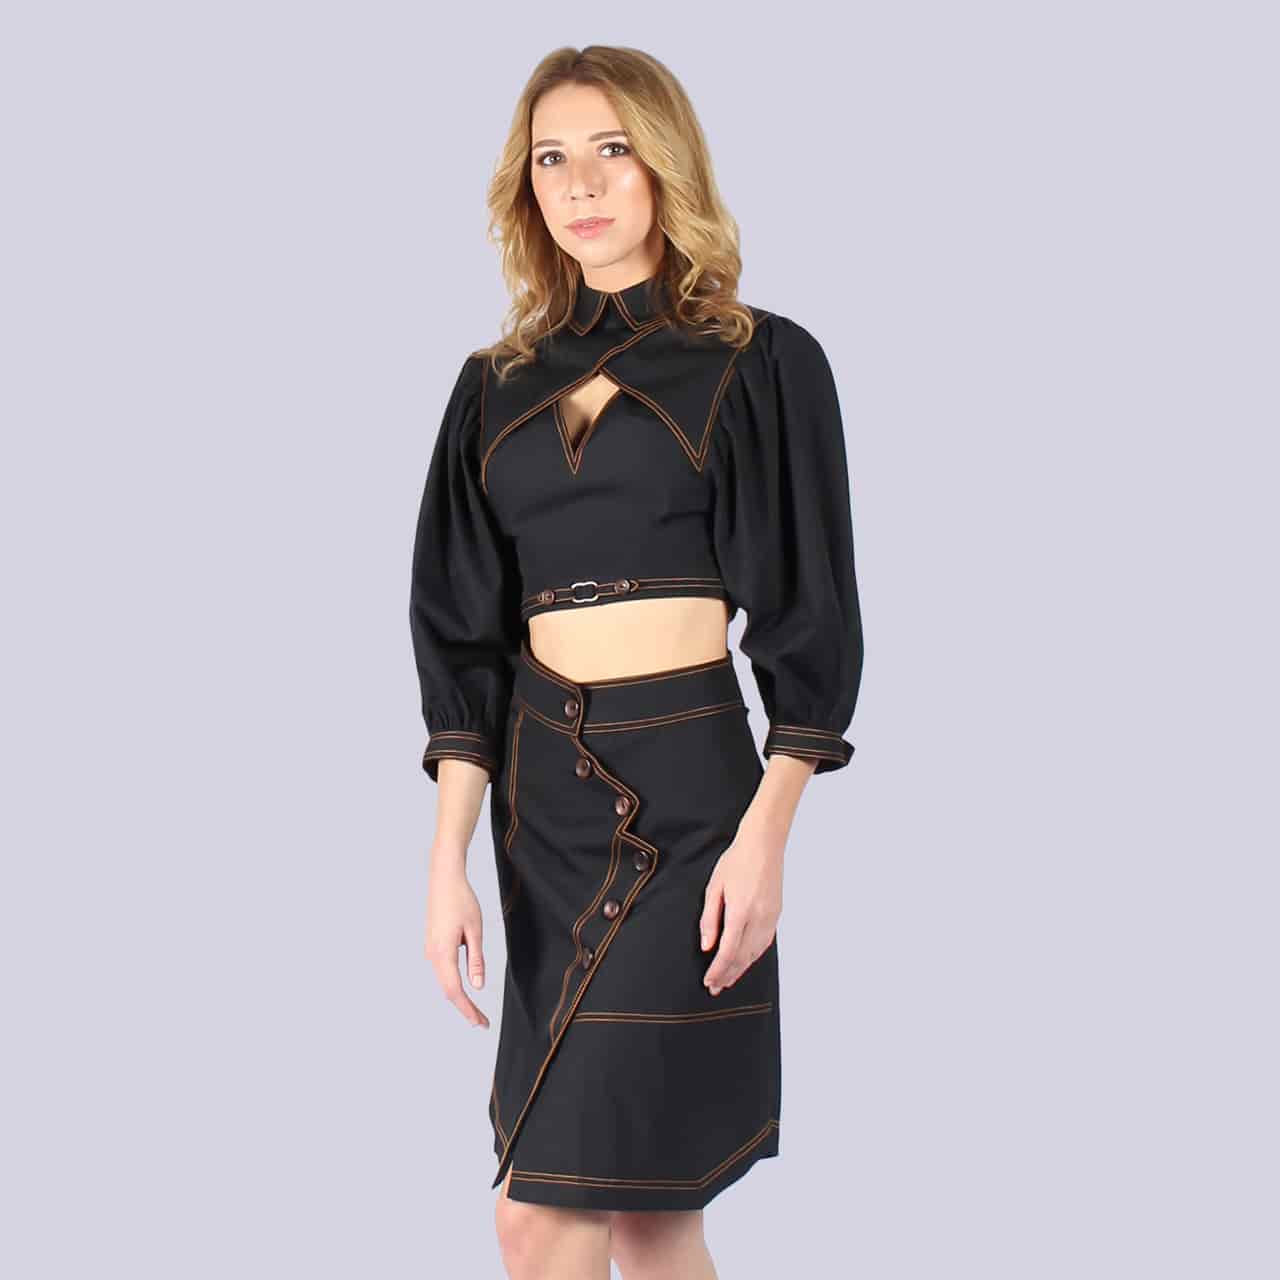 Milan - Crop Top and Skirt Set - NIVA Fashion House